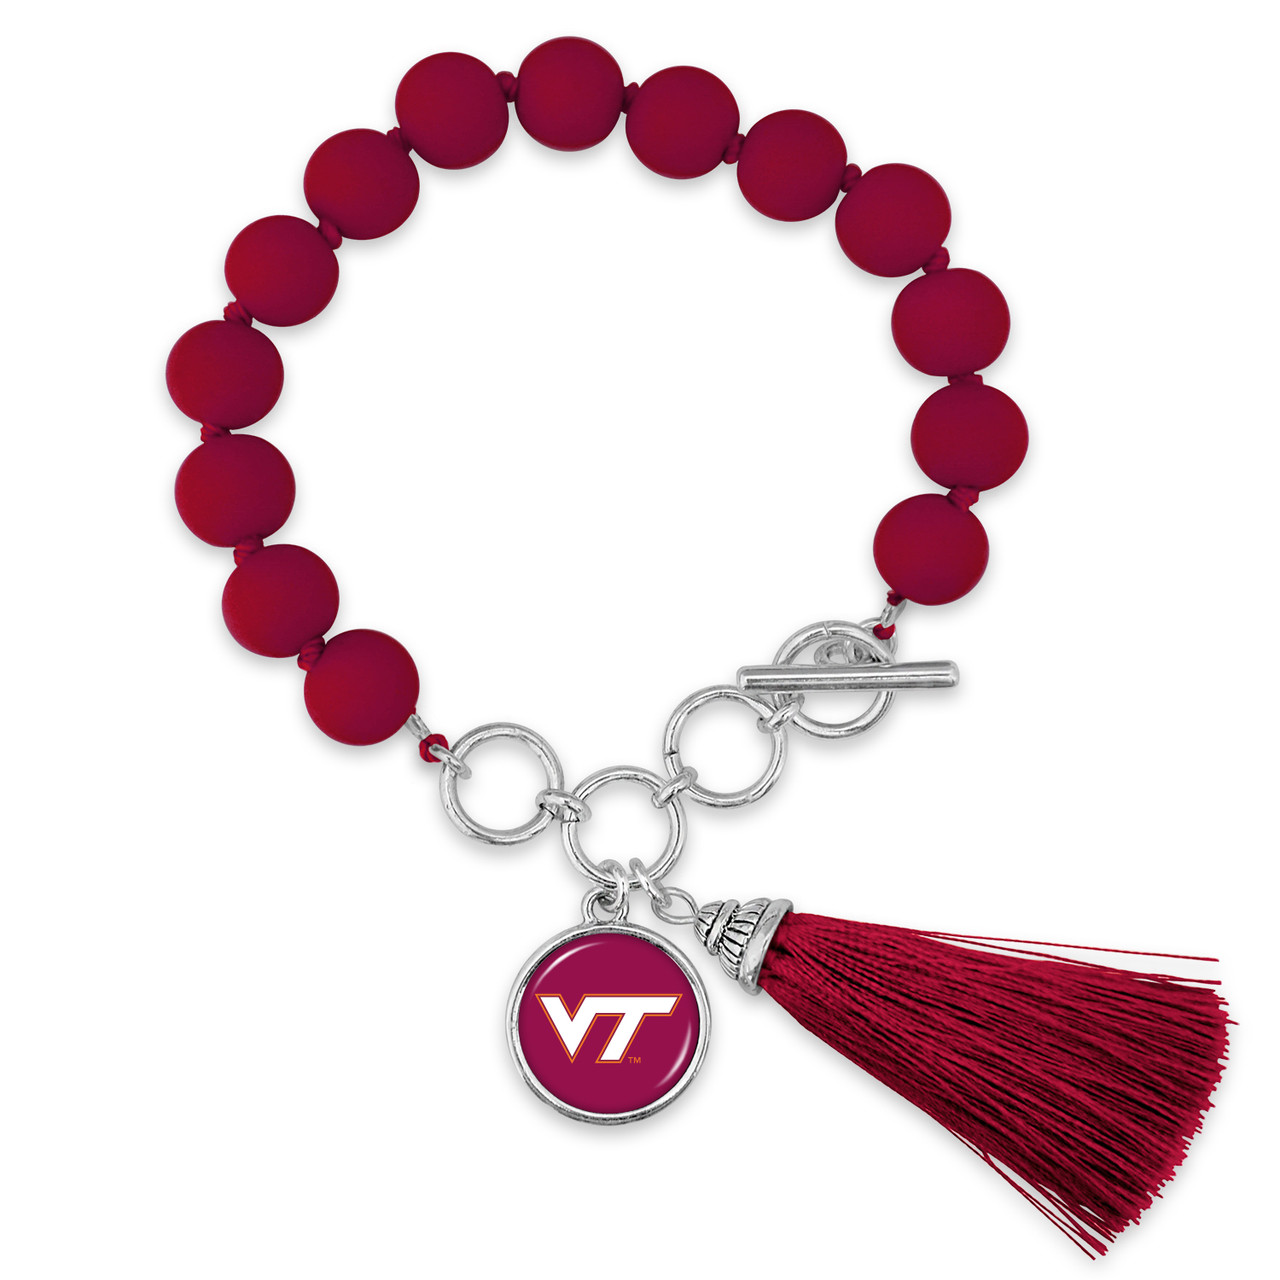 Virginia Tech Hokies Bracelet- No Strings Attached